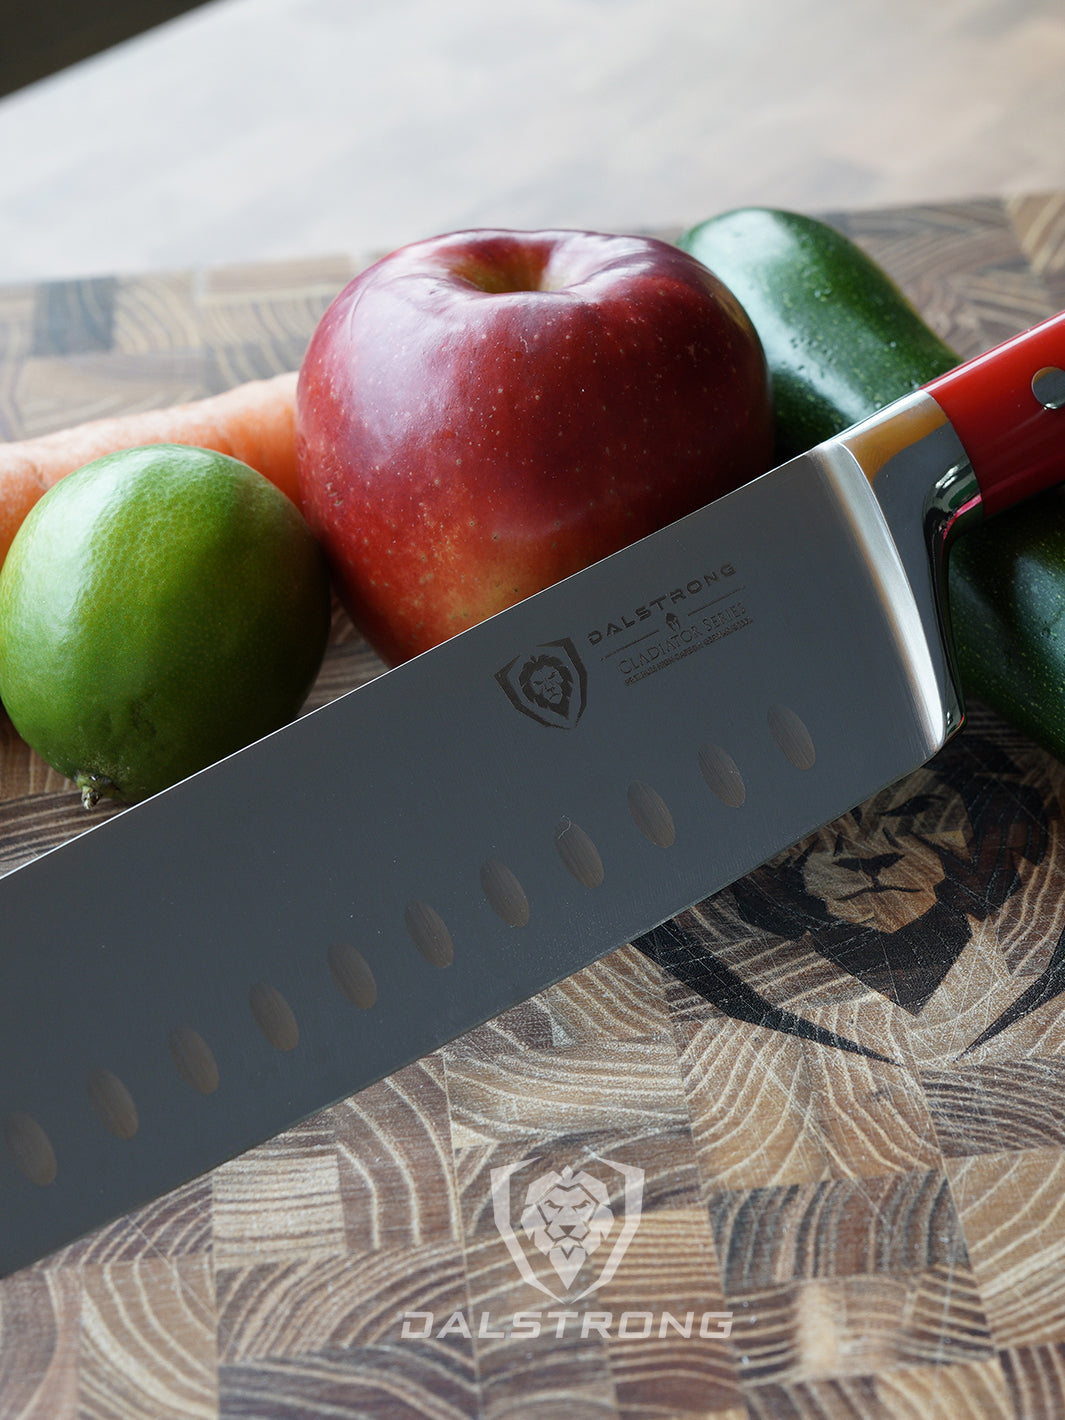 Nakiri Vegetable Knife 7" | Crimson Red ABS Handle | Gladiator Series | NSF Certified | Dalstrong ©